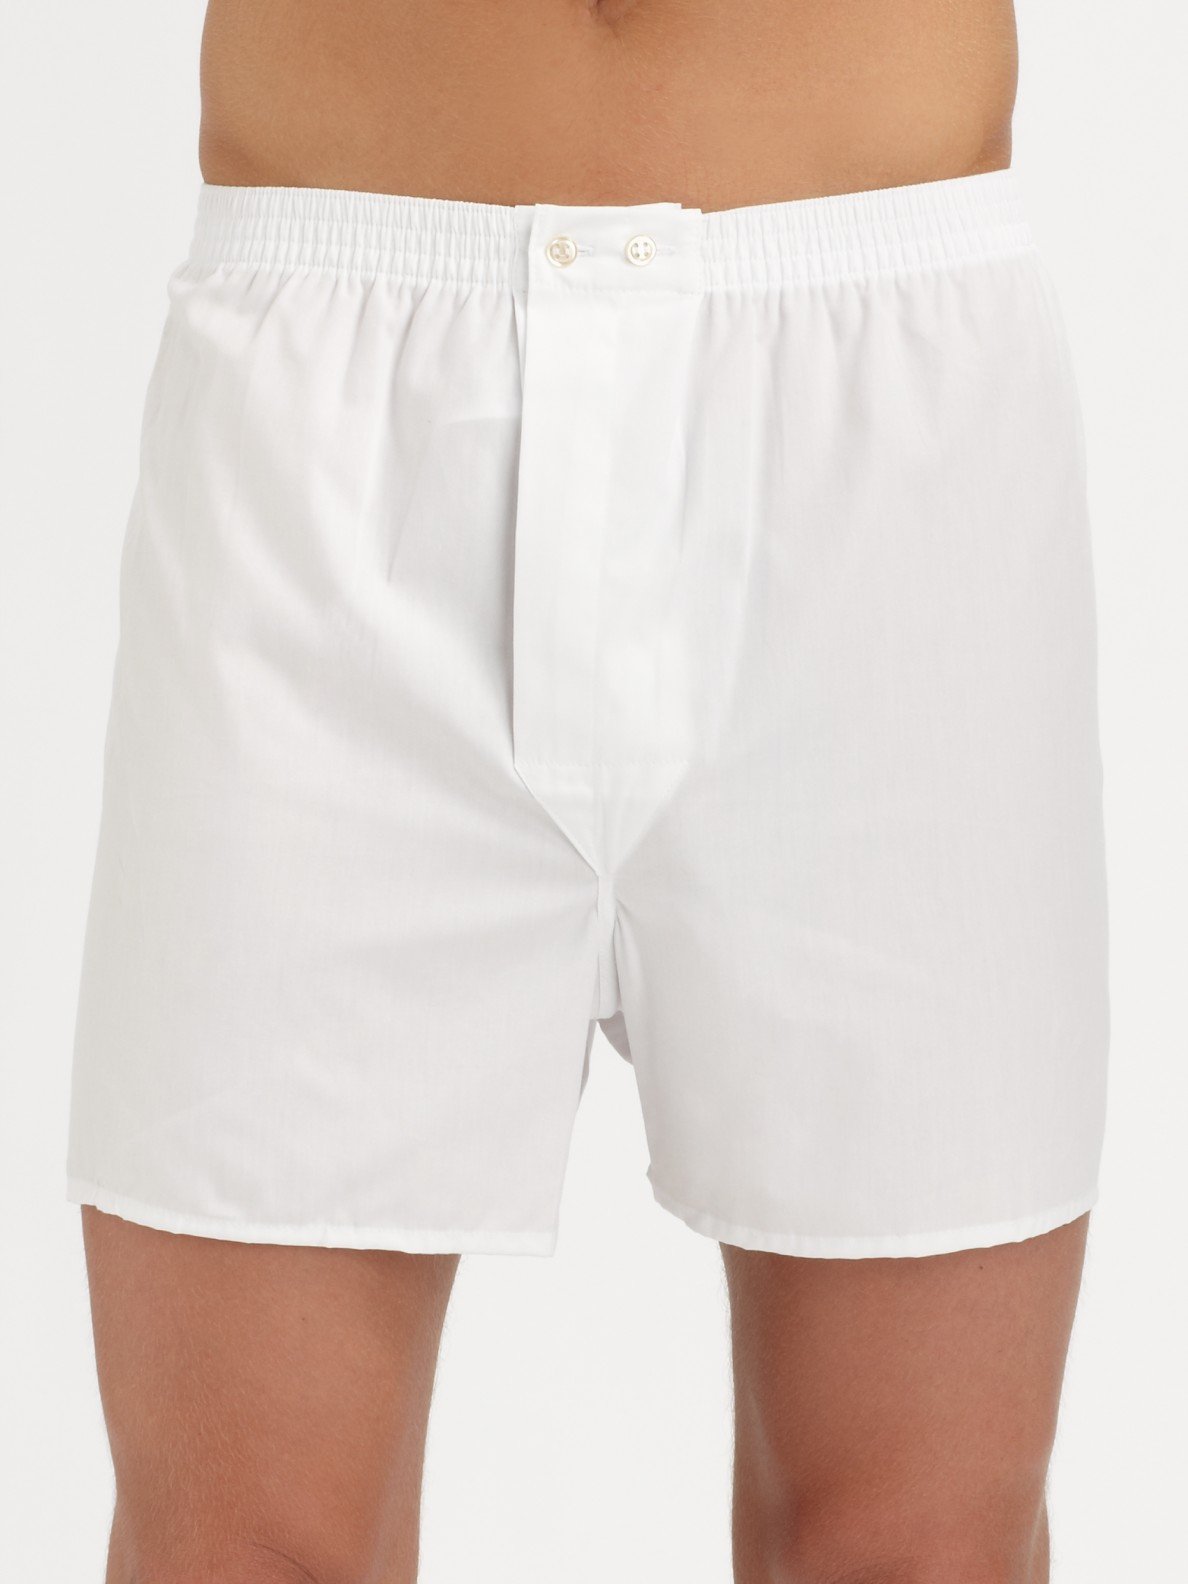 Derek rose Solid Boxer Shorts in White for Men - Save 15% | Lyst